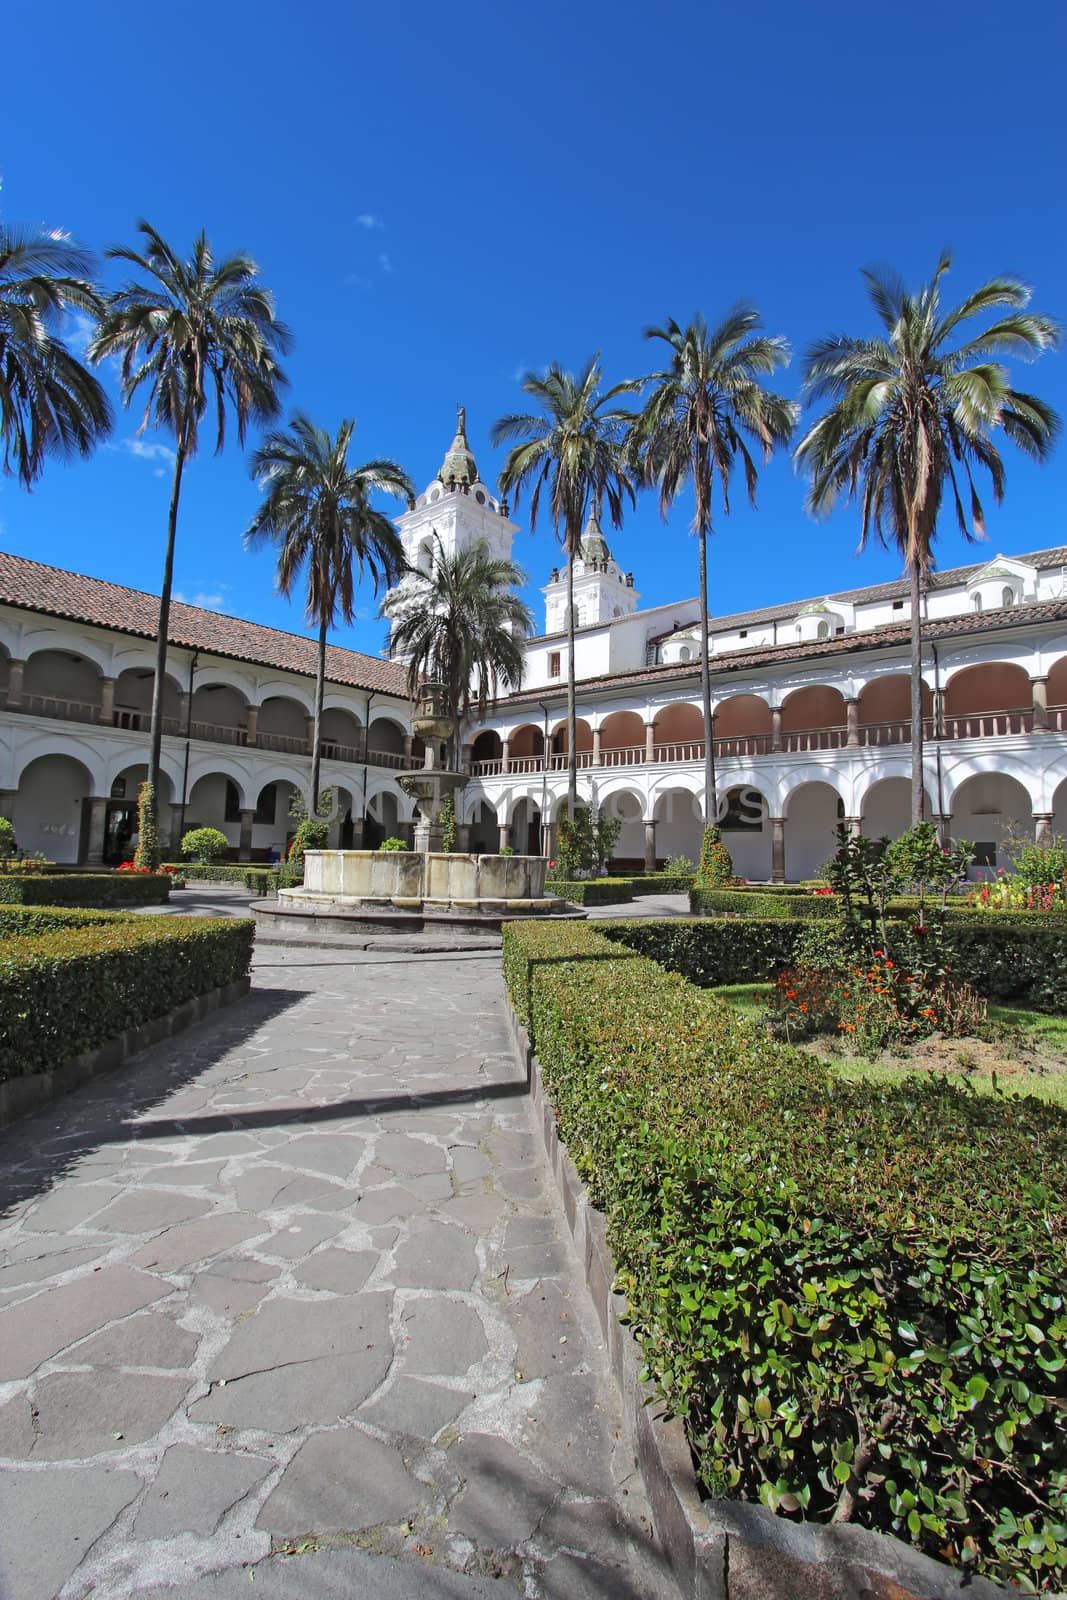 Courtyard gardens, fountain and dome of the church and monastery of San Francisco in Quito, Ecuador